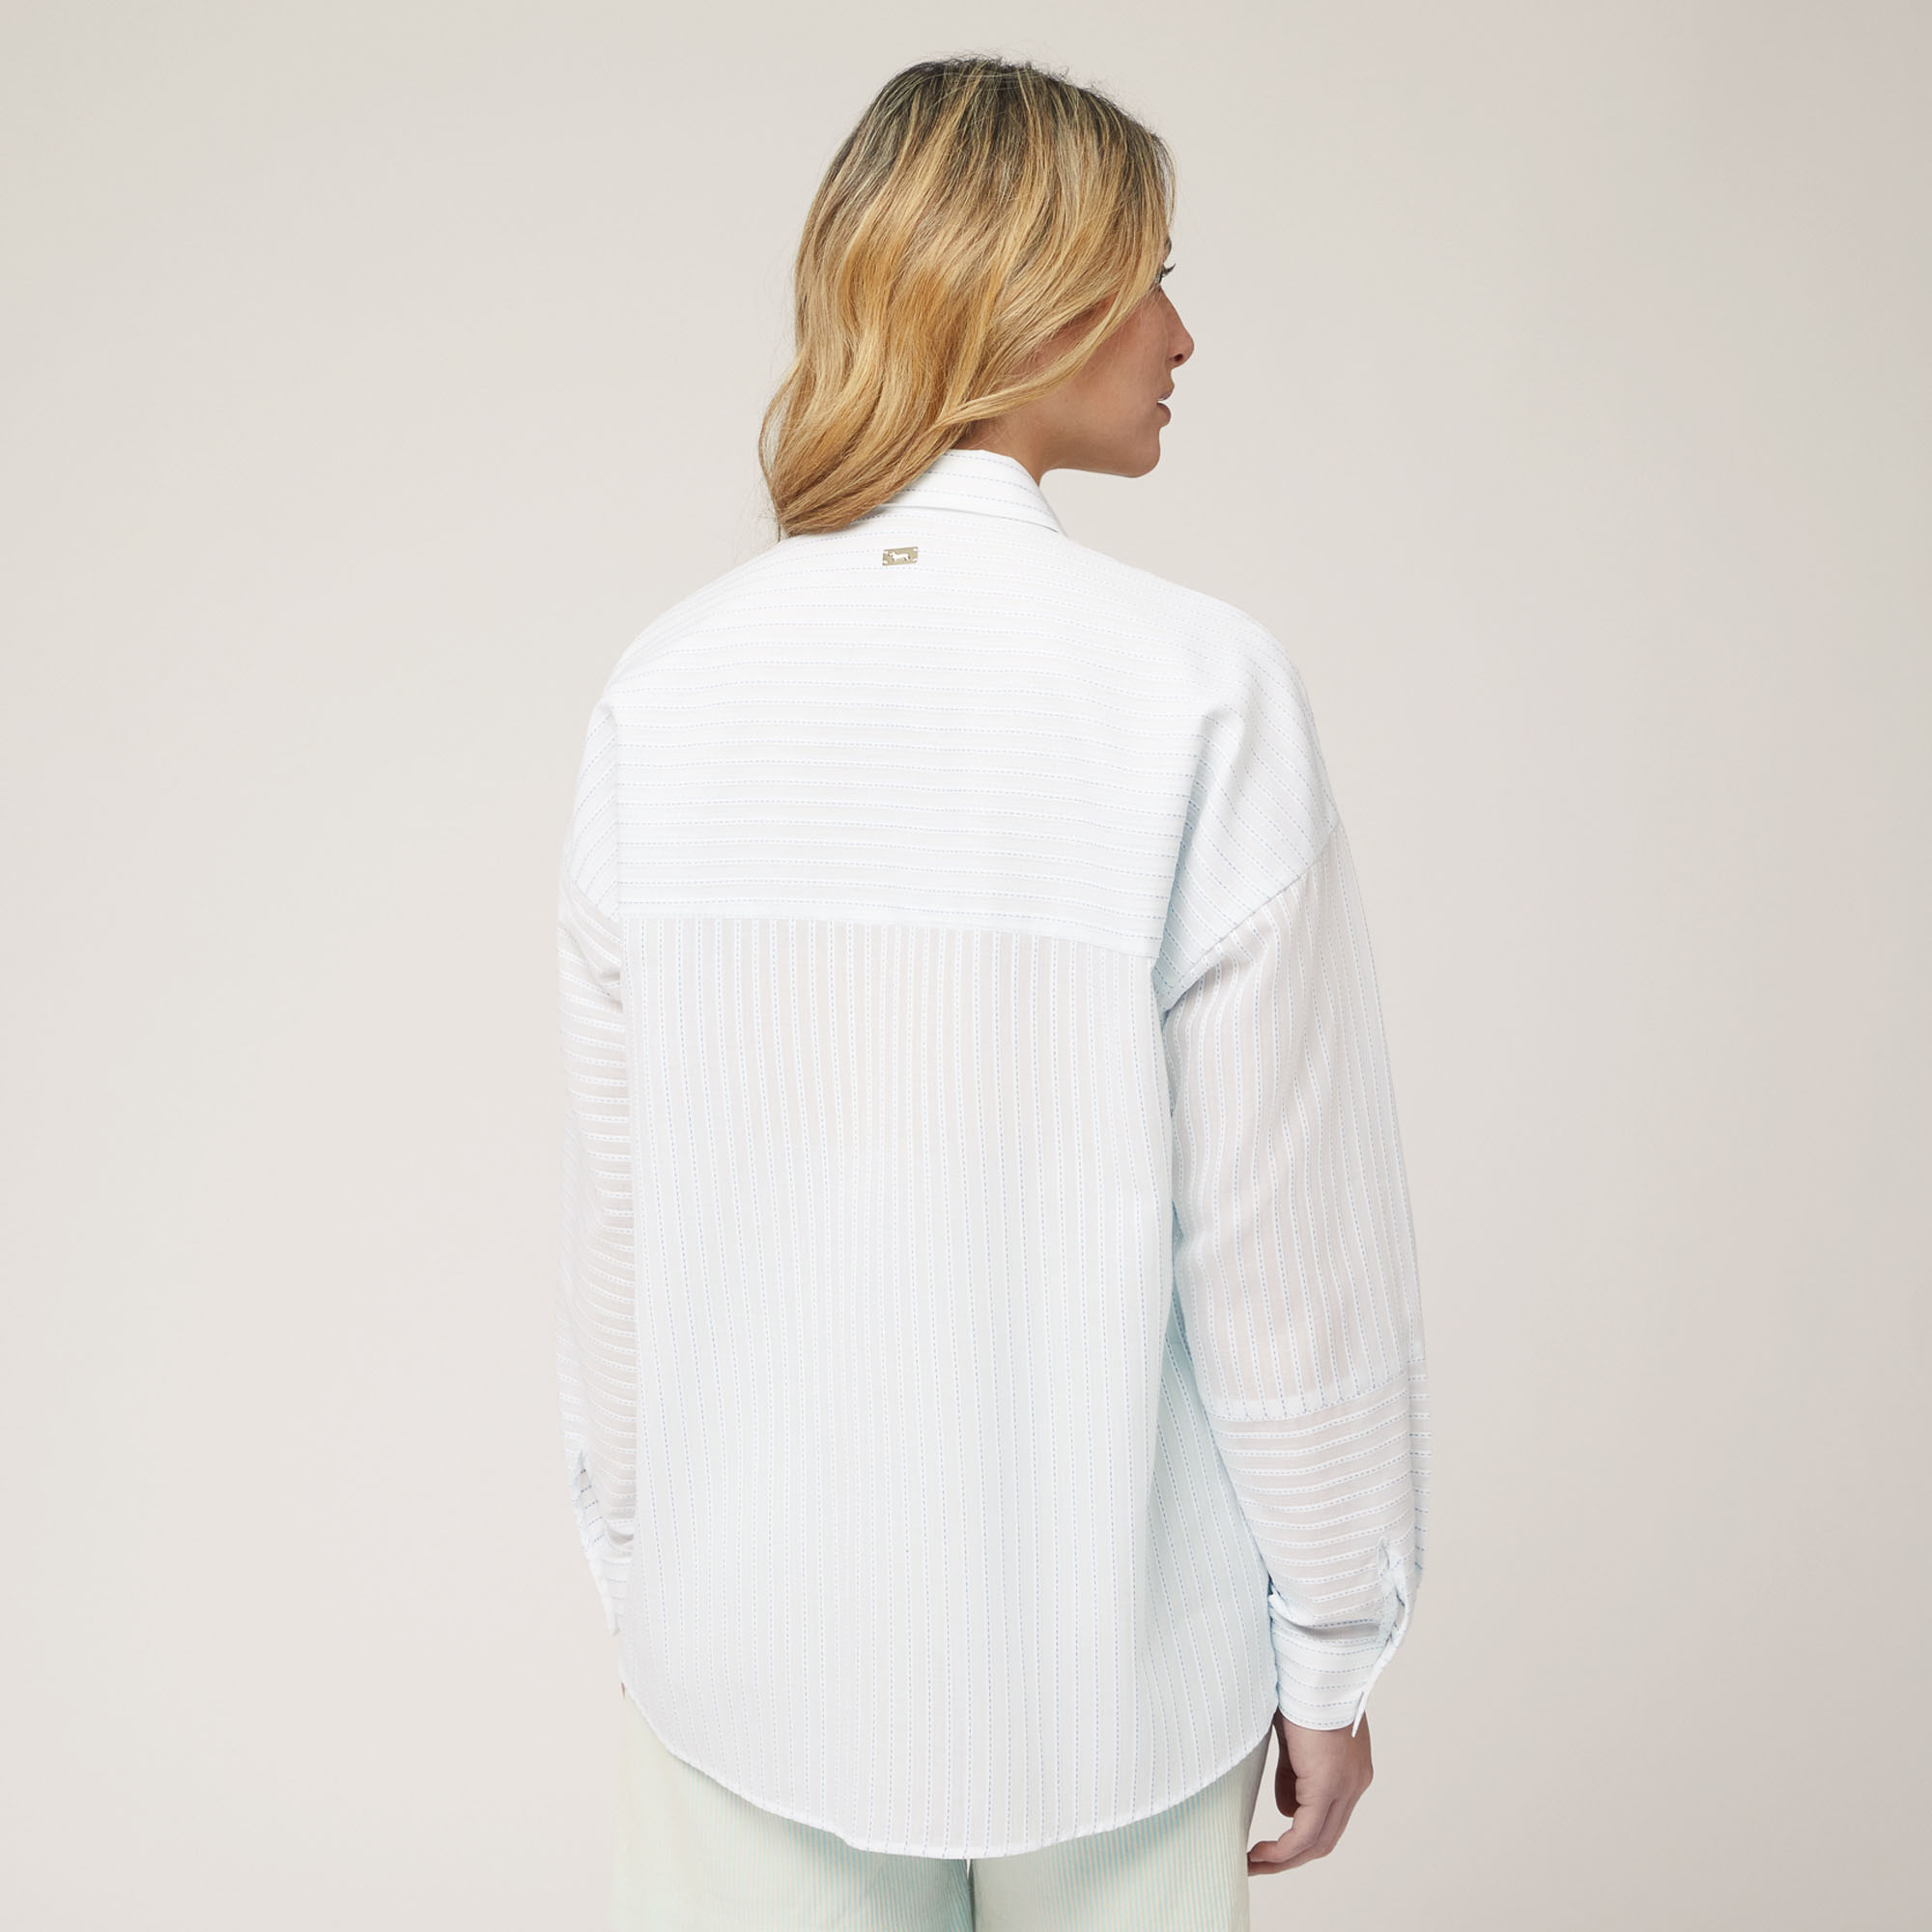 Soft Shirt with Stitching, White, large image number 1